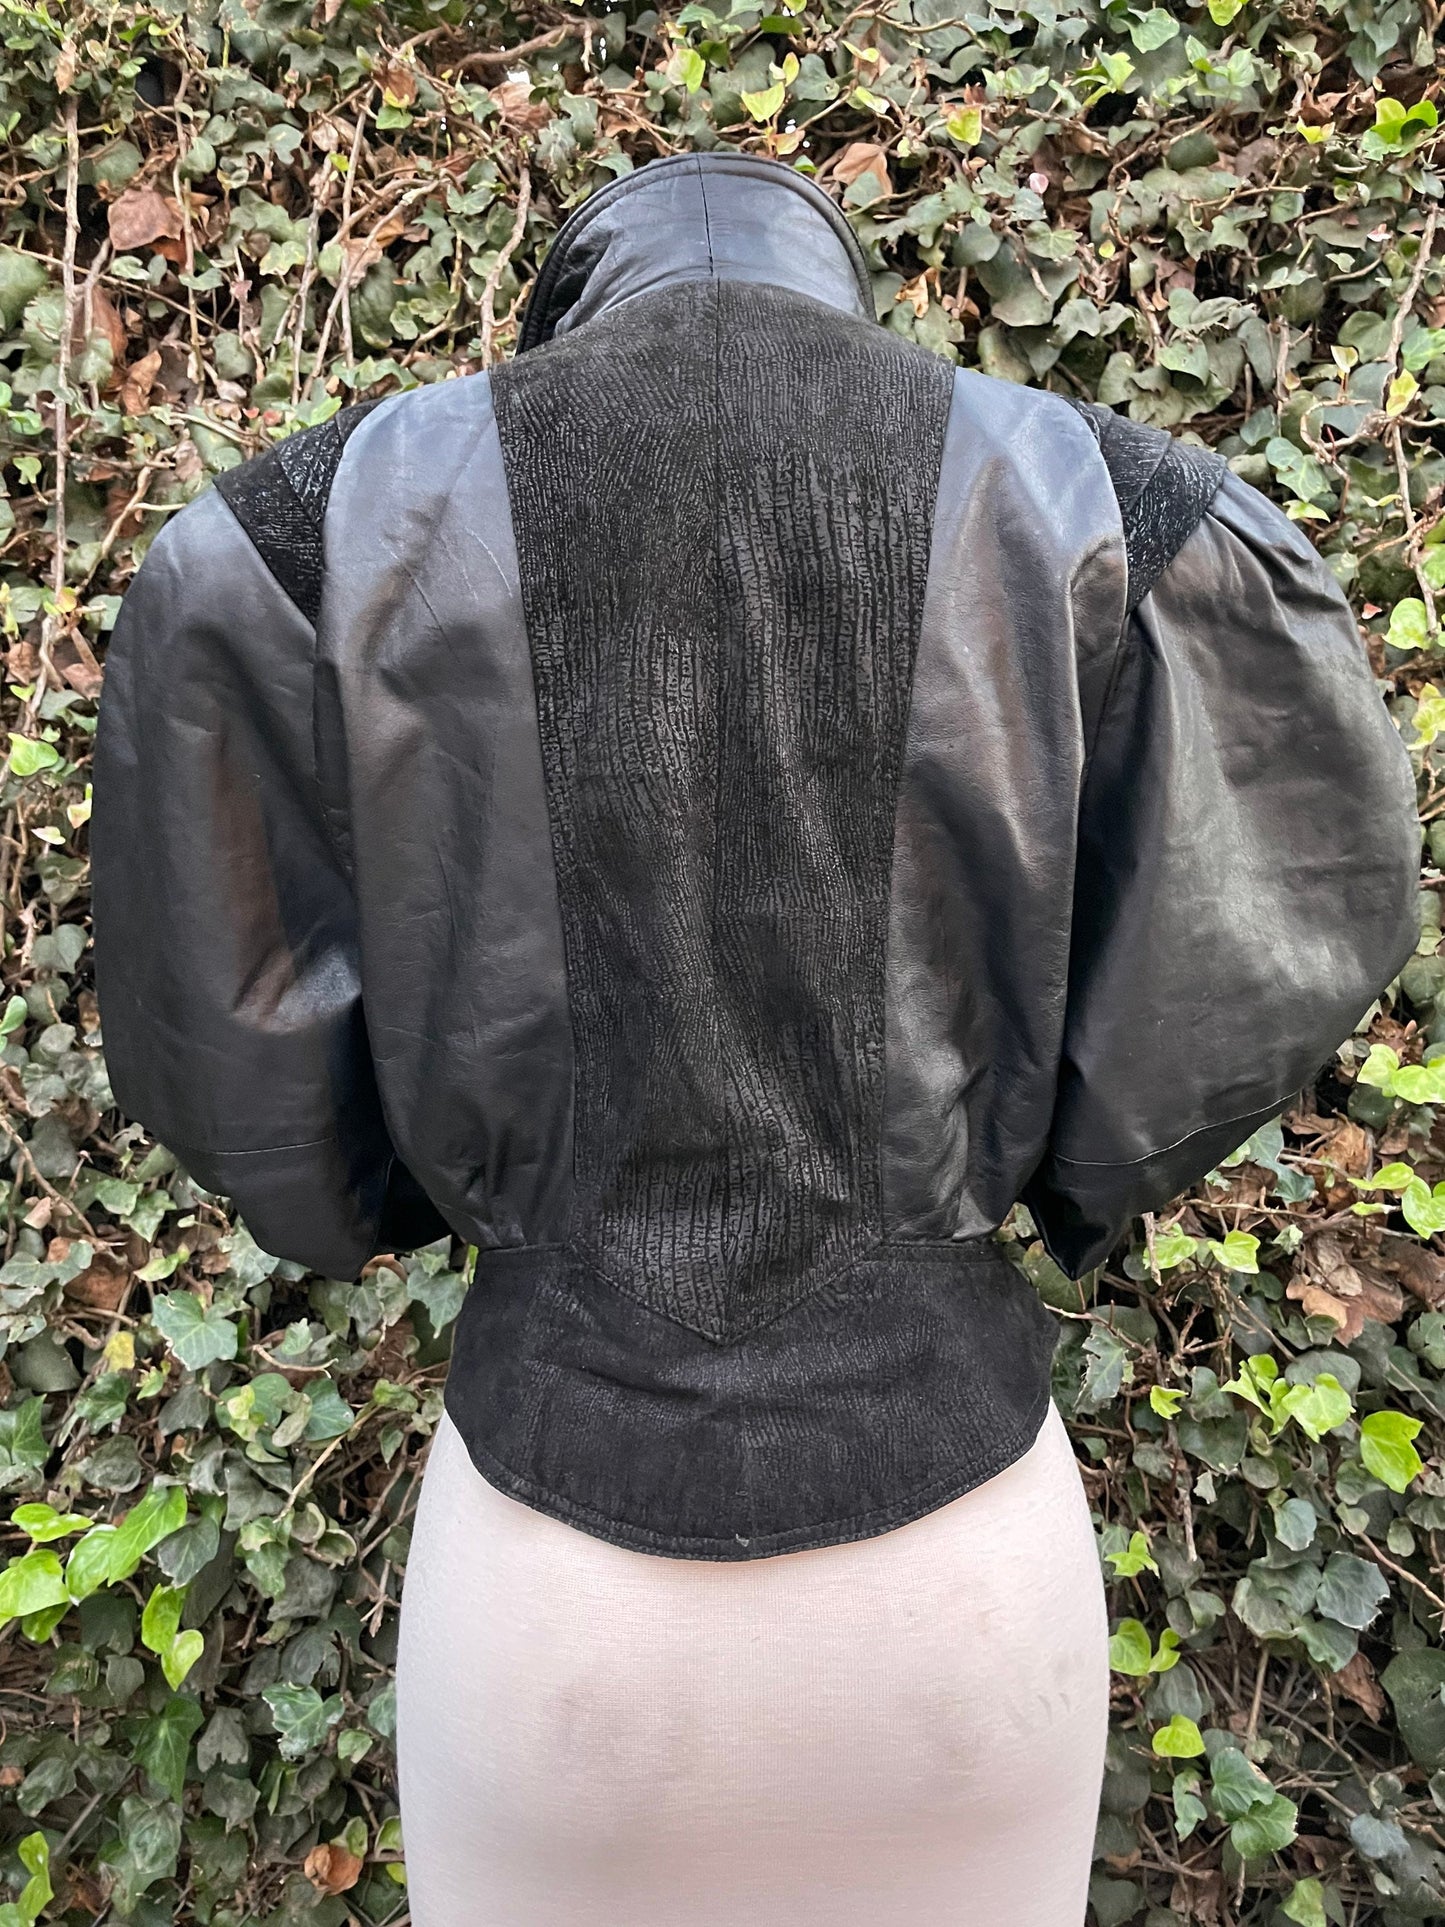 Vintage 1980’s Black Leather & Suede Raglan Batwing Shoulder-Pad Crop Jacket